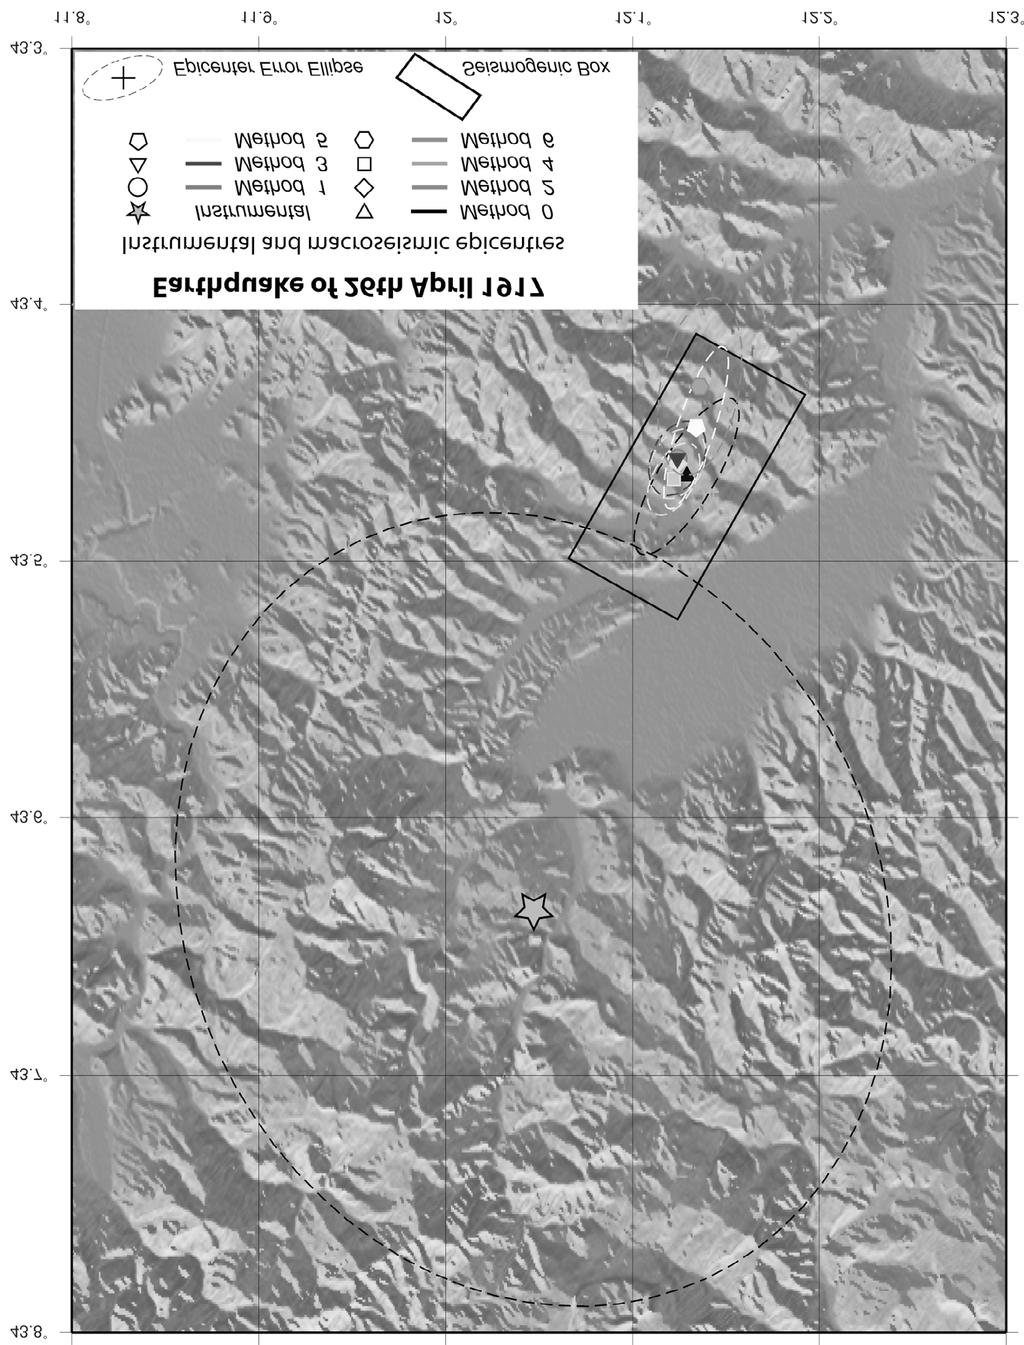 BERNARDI ET AL. Figure 3. Comparison of the instrumental and macroseismic locations of the epicenter of 1917 s earthquake.